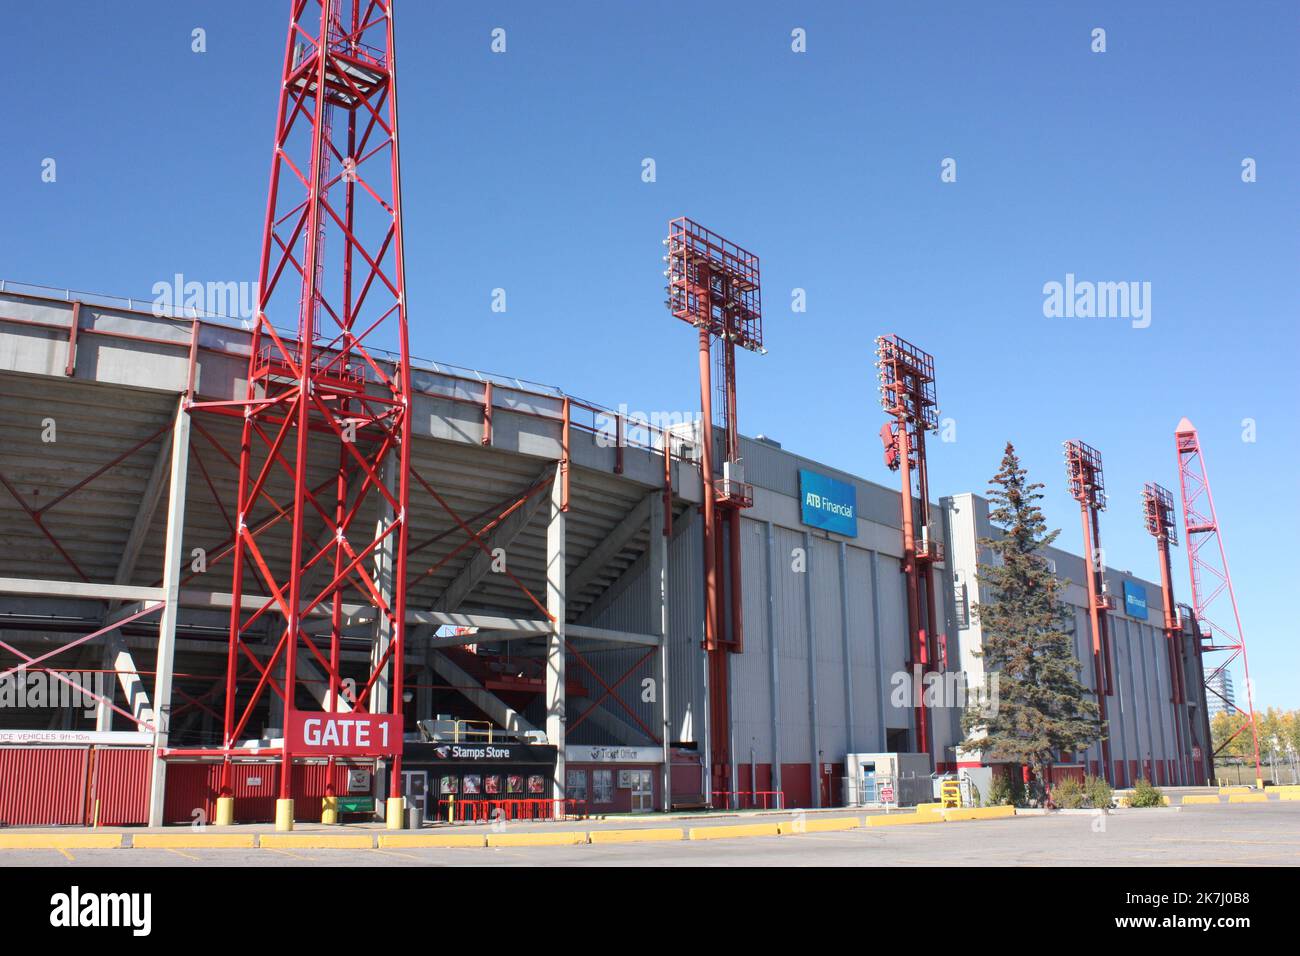 The exterior of McMahon Stadium home of the Calgary Stampeders in Calgary, Alberta, Canada Stock Photo